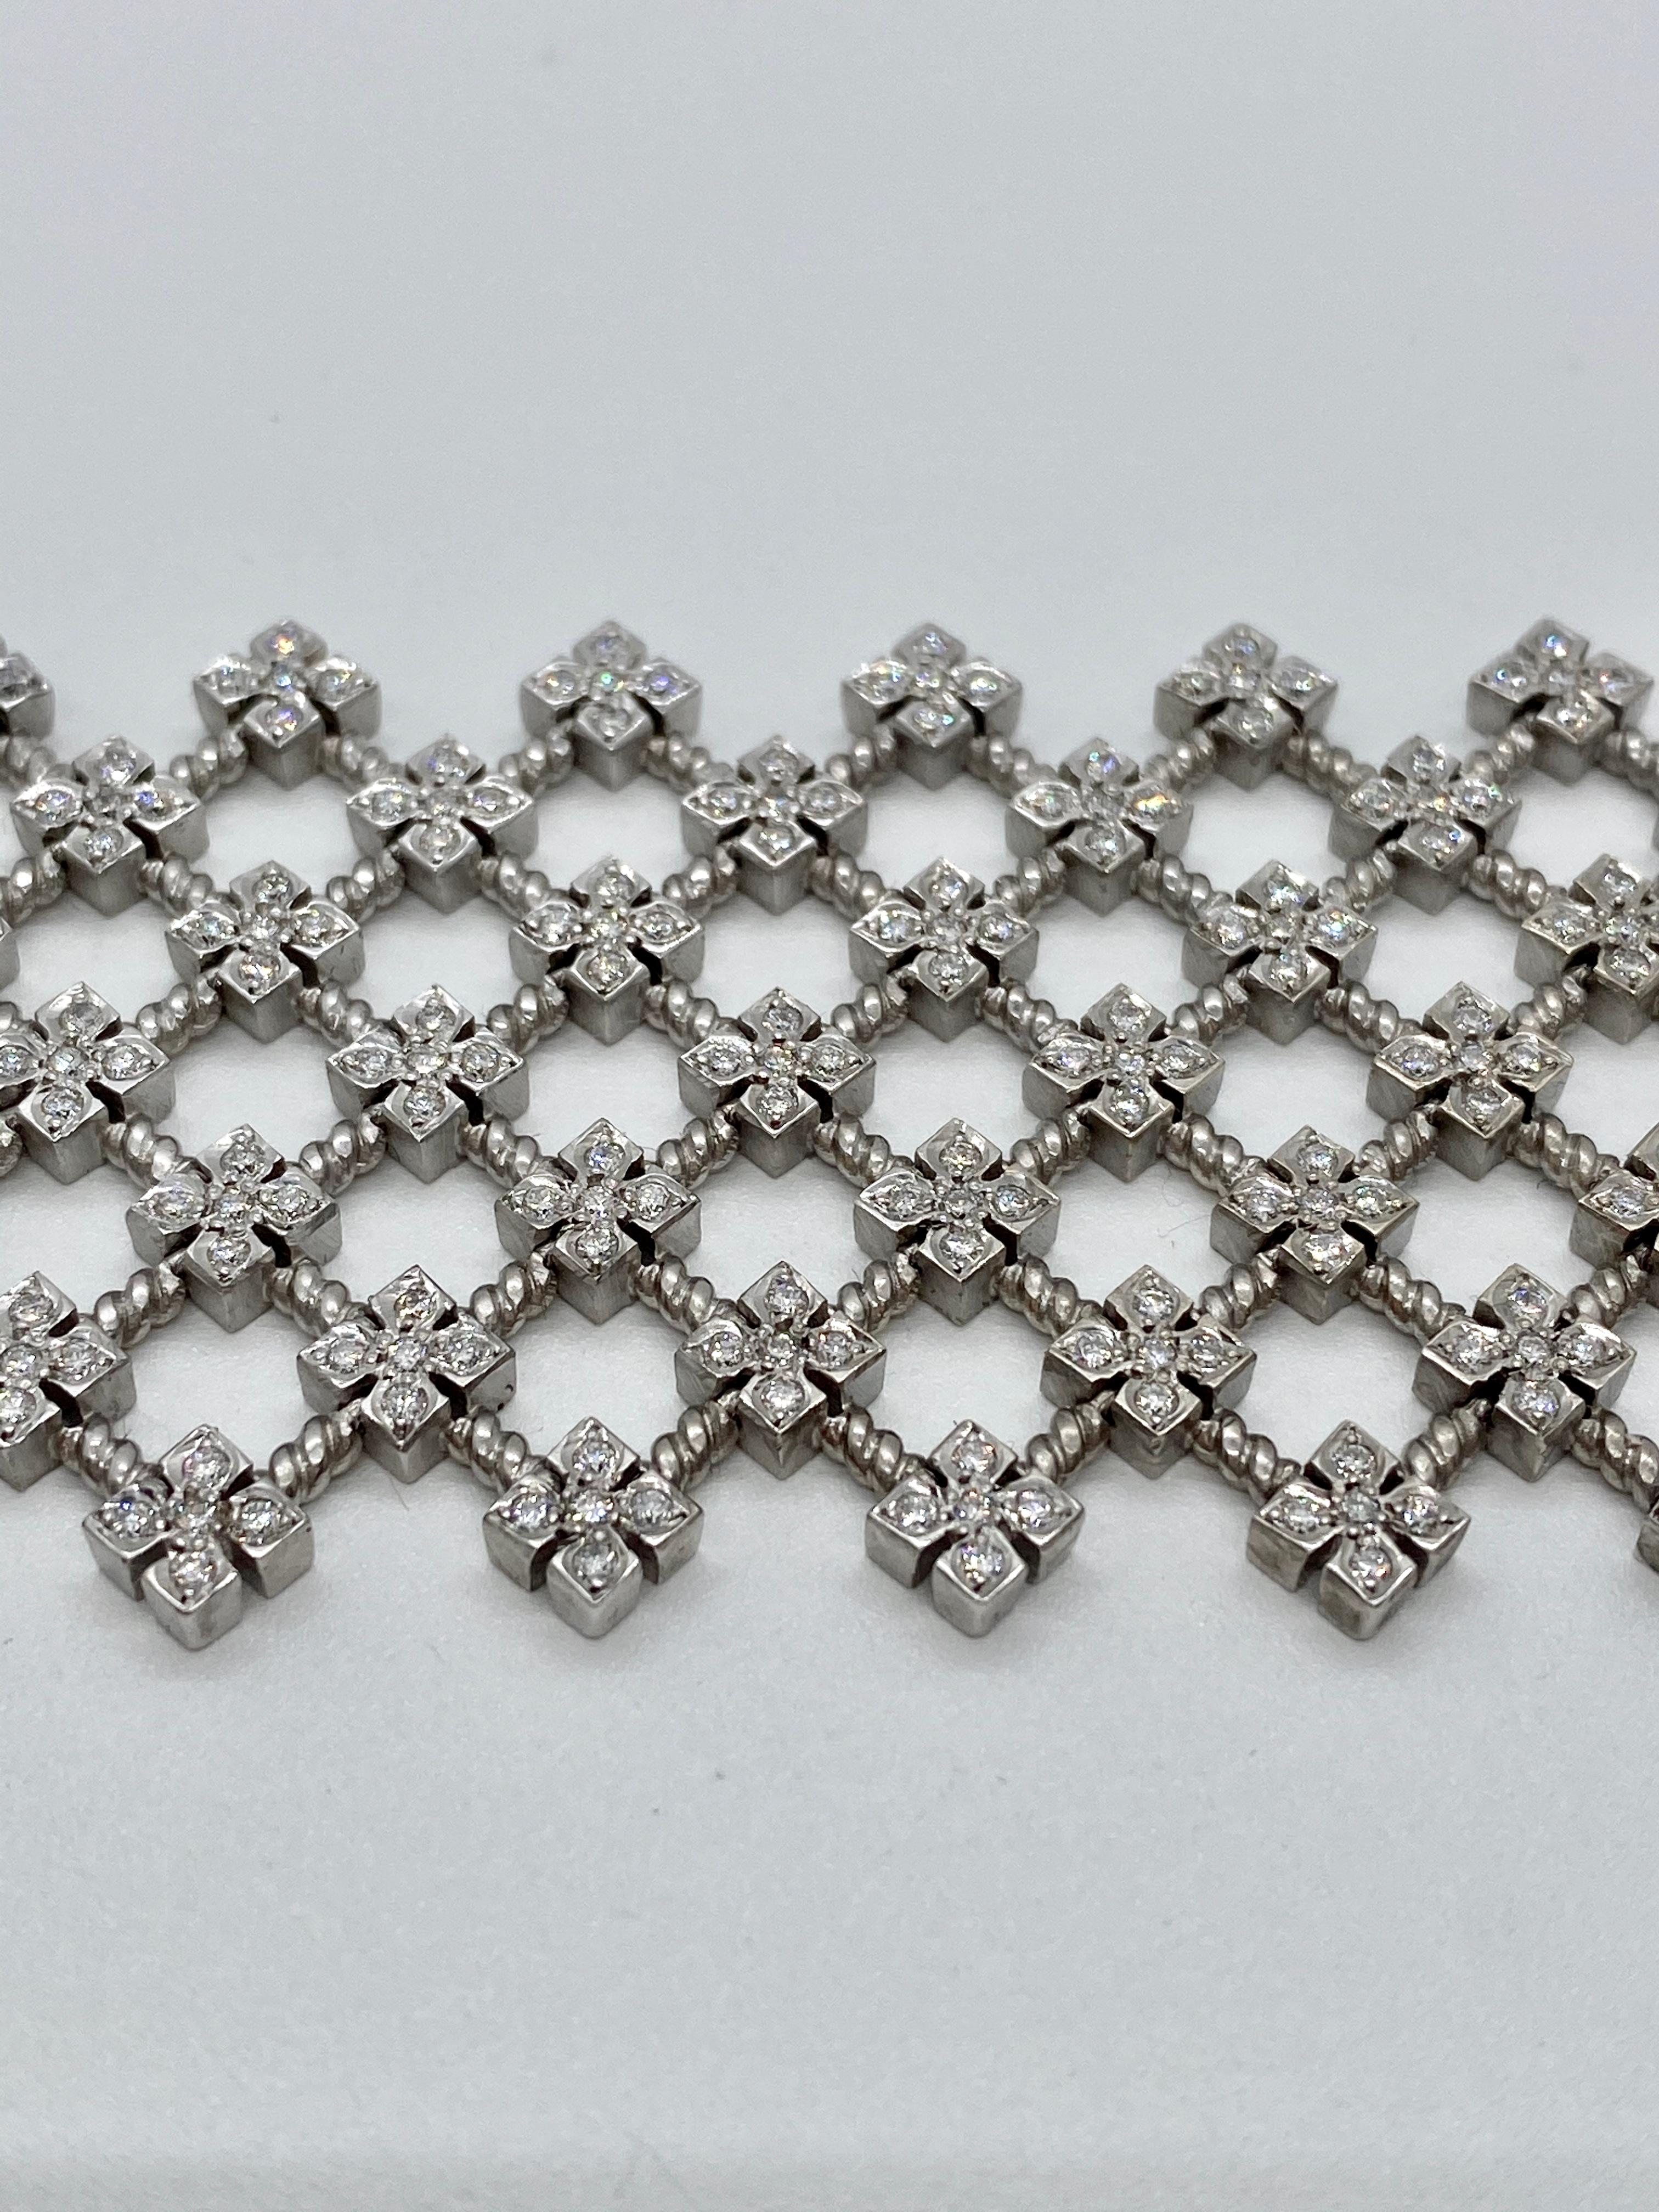 Modern Loree Rodkin 18 Karat White Diamond Cross Gothic Bracelet For Sale